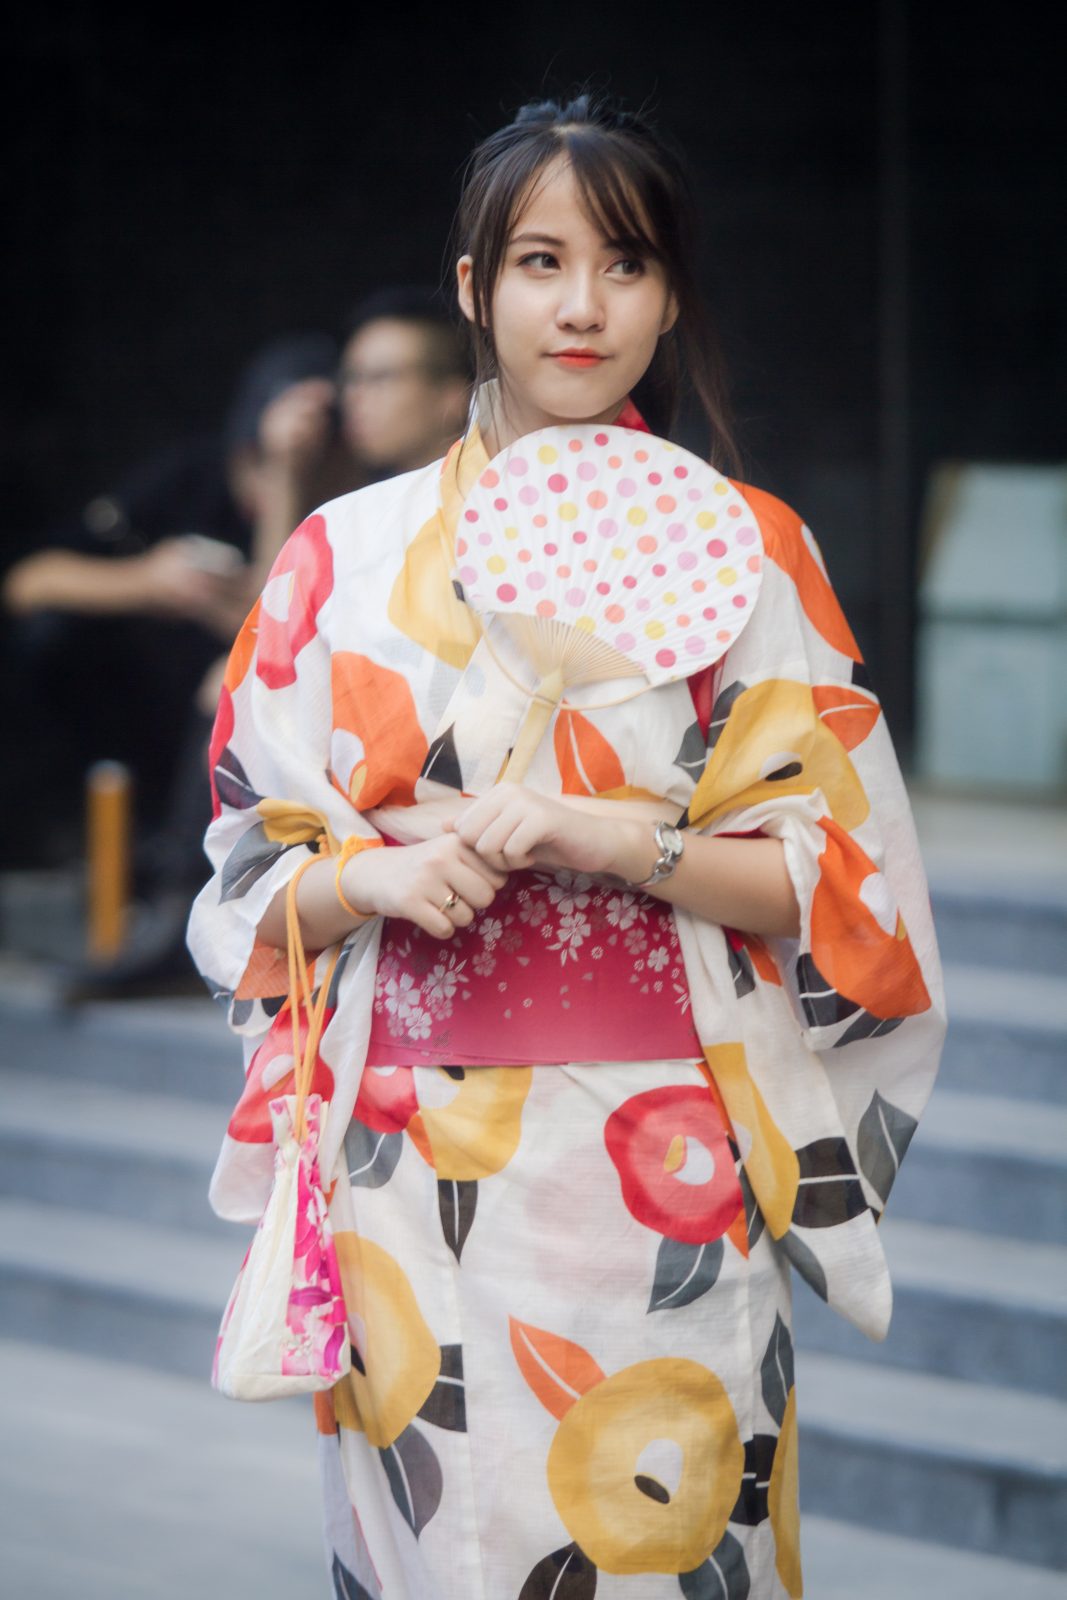 Woman wearing kimono holding fan